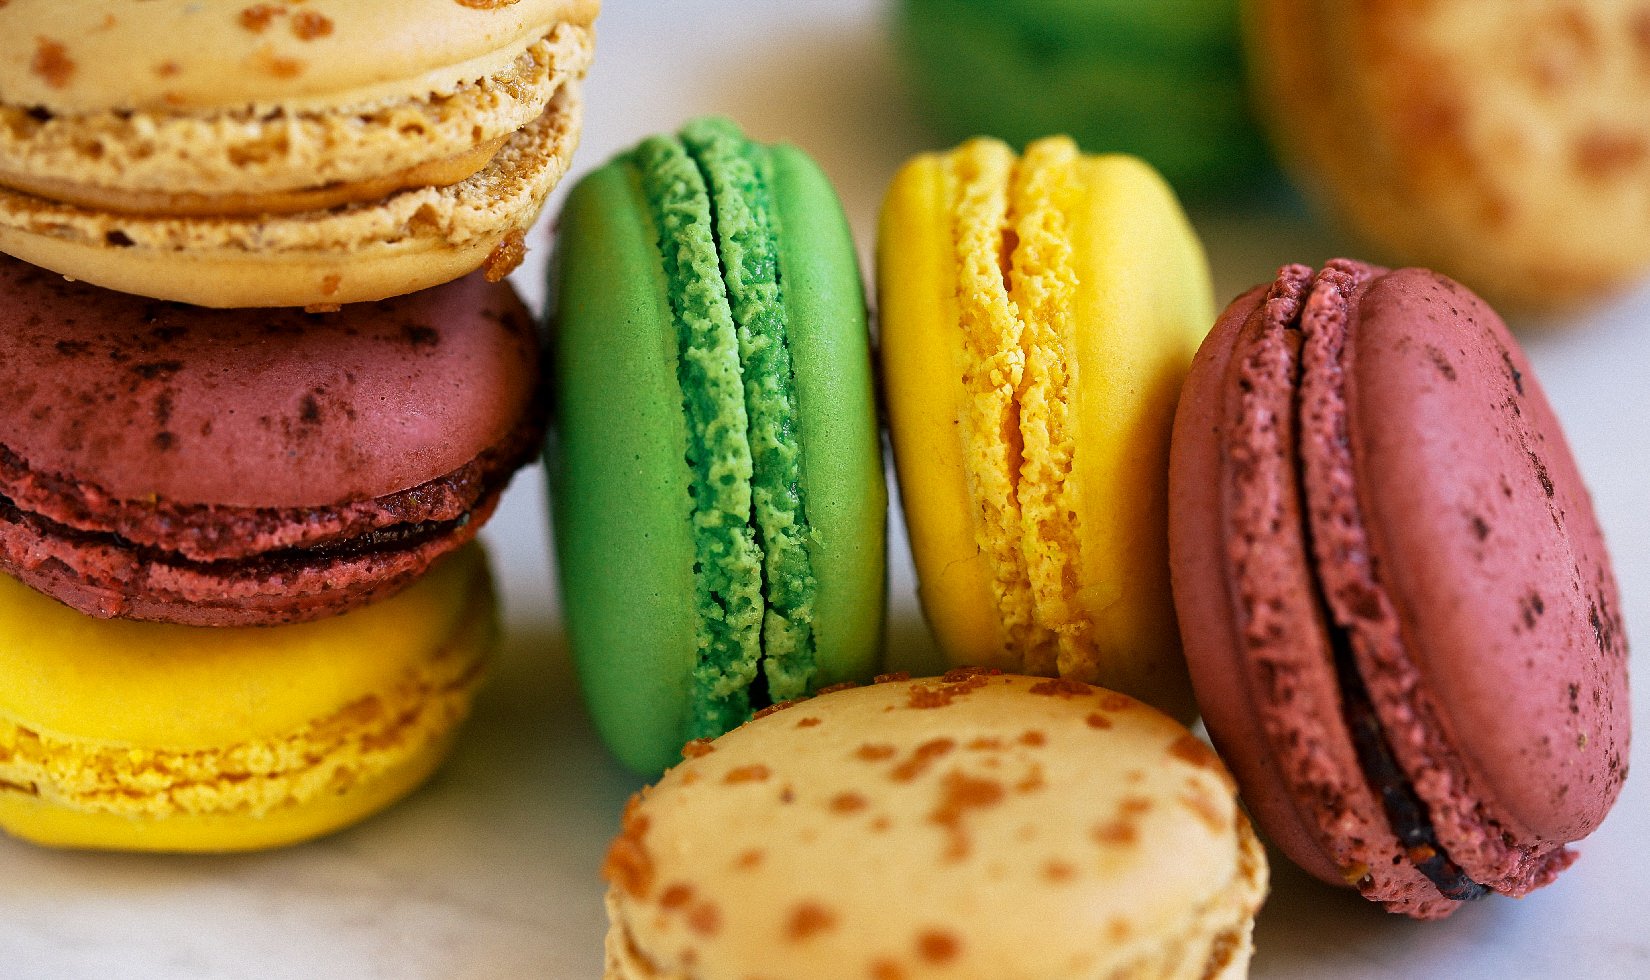 2016-6-9-french-macarons-cookie-recipe-vsco-blog-edited-summer-bites-6437